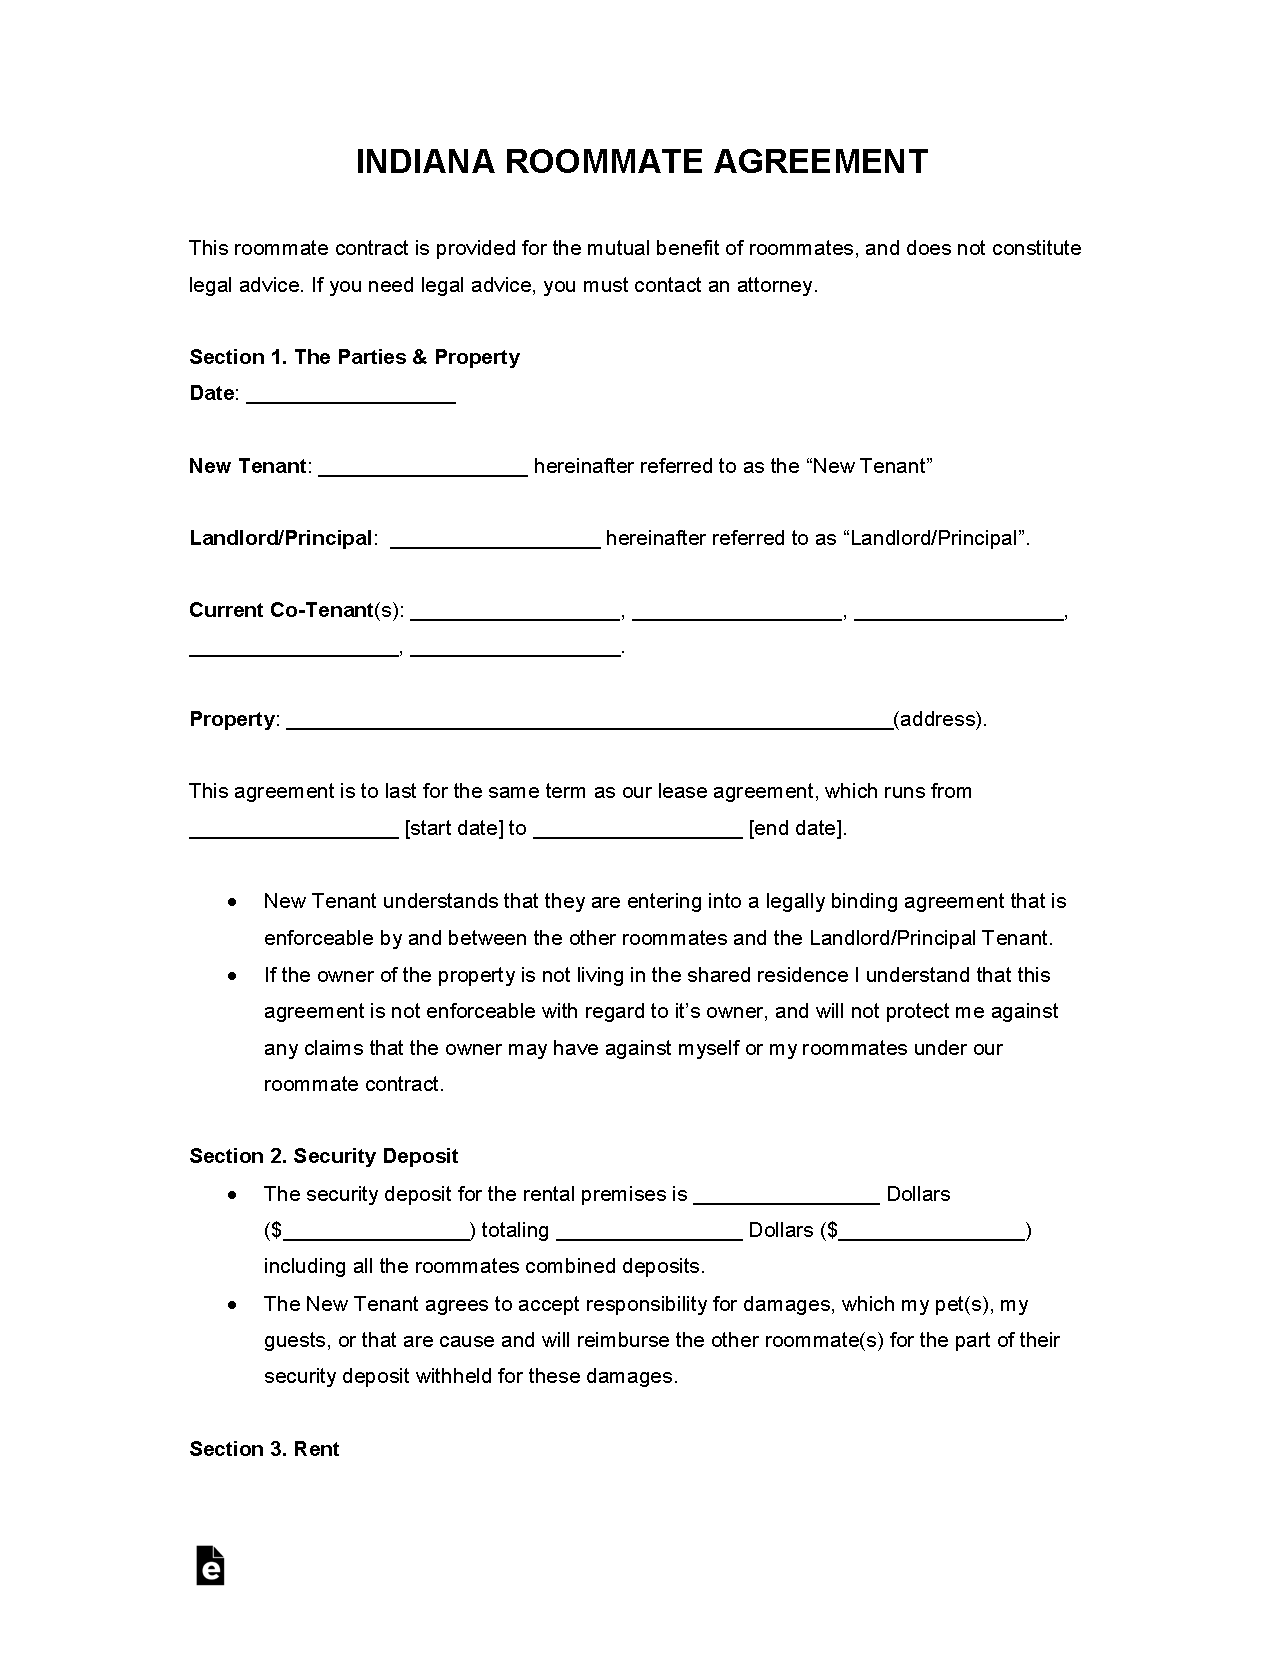 roommate rental agreement template